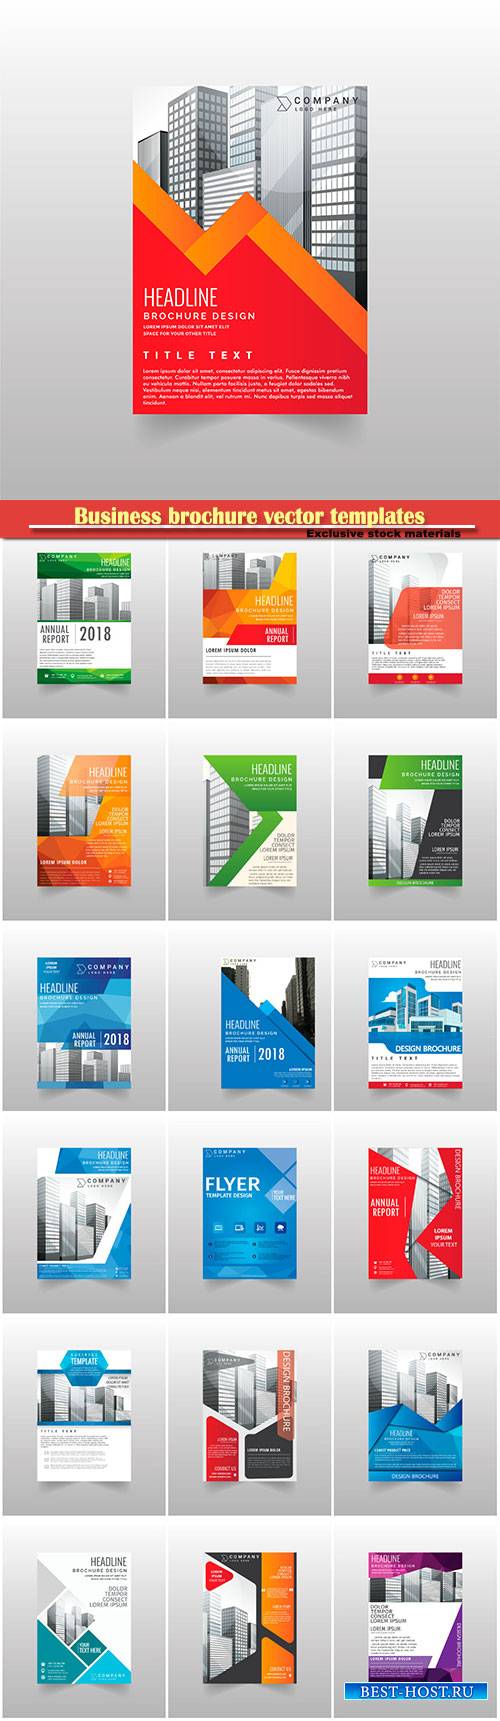 Business brochure vector templates, magazine cover, business mockup, educat ...